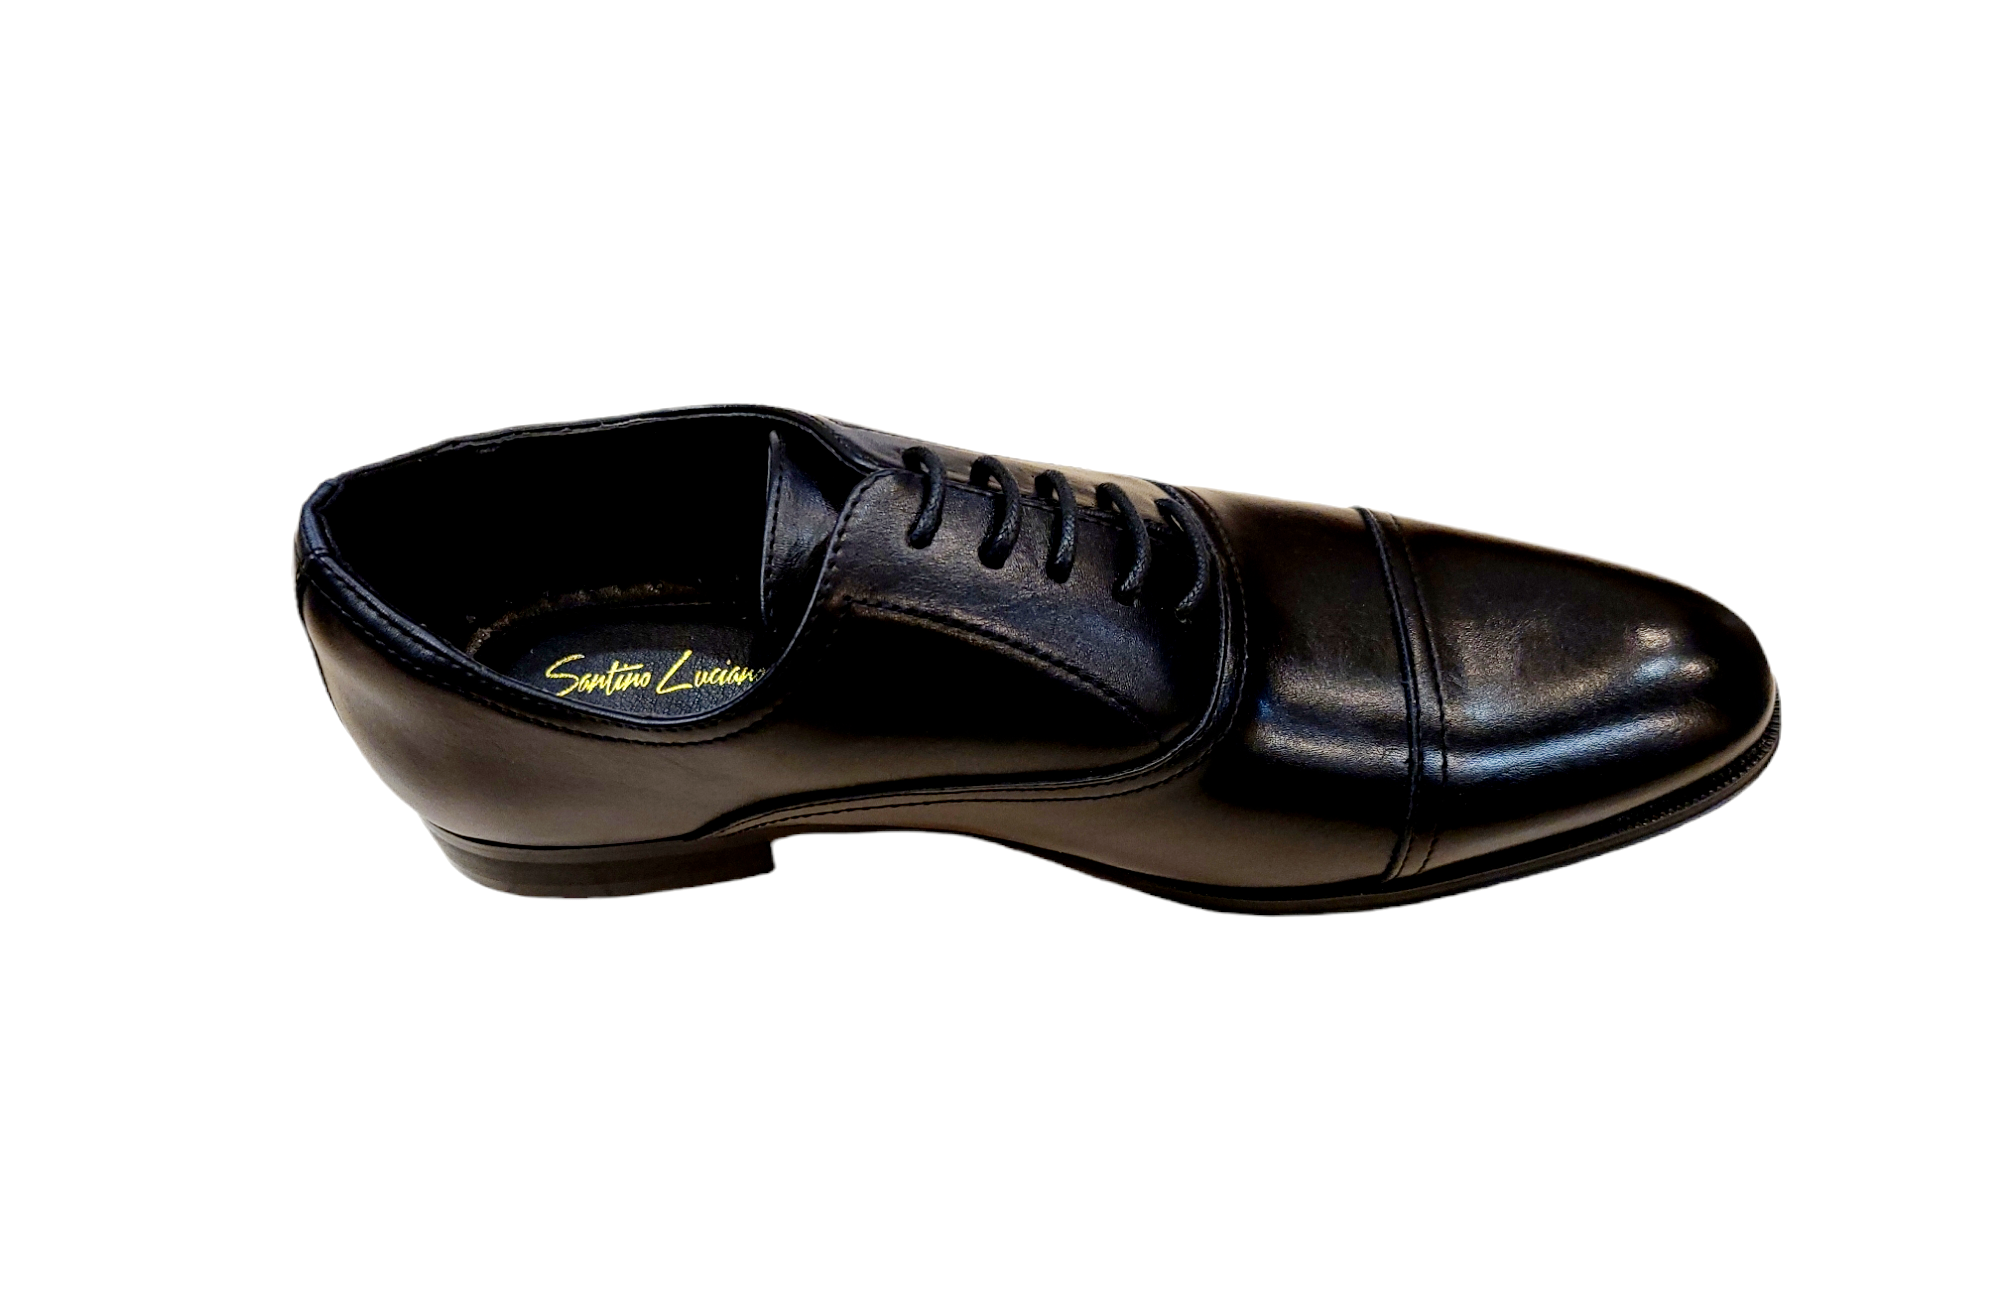 Santino Luciano Cap Toe Shoes